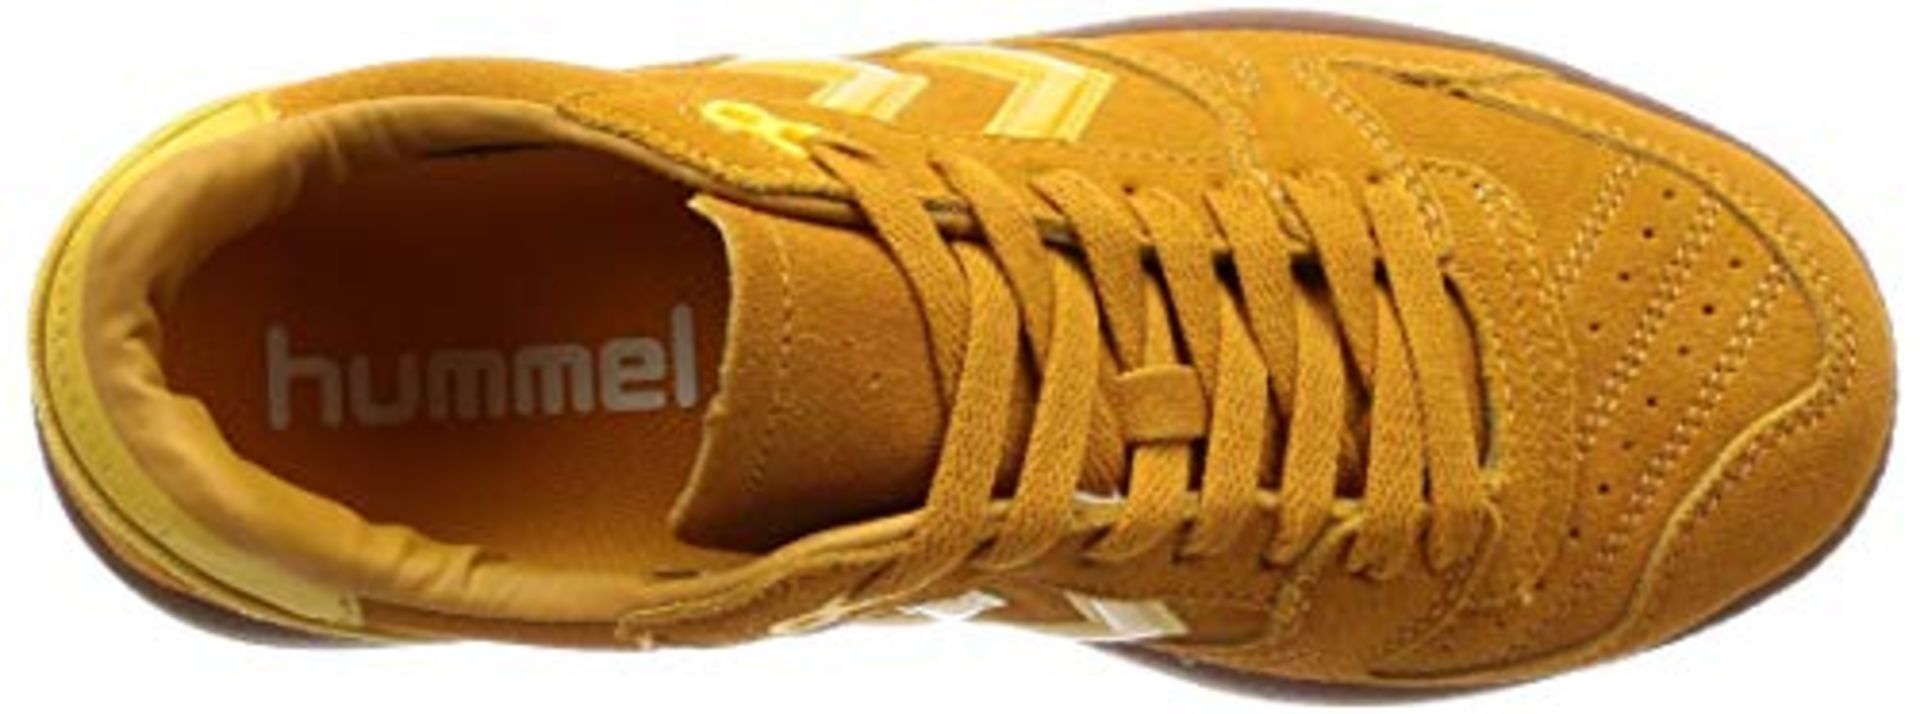 1 x hummel Team Shoes Yellow HB, HM201937, Sunflower, 42 Size: 42 EU | EAN: 5700494865820 - Image 6 of 8